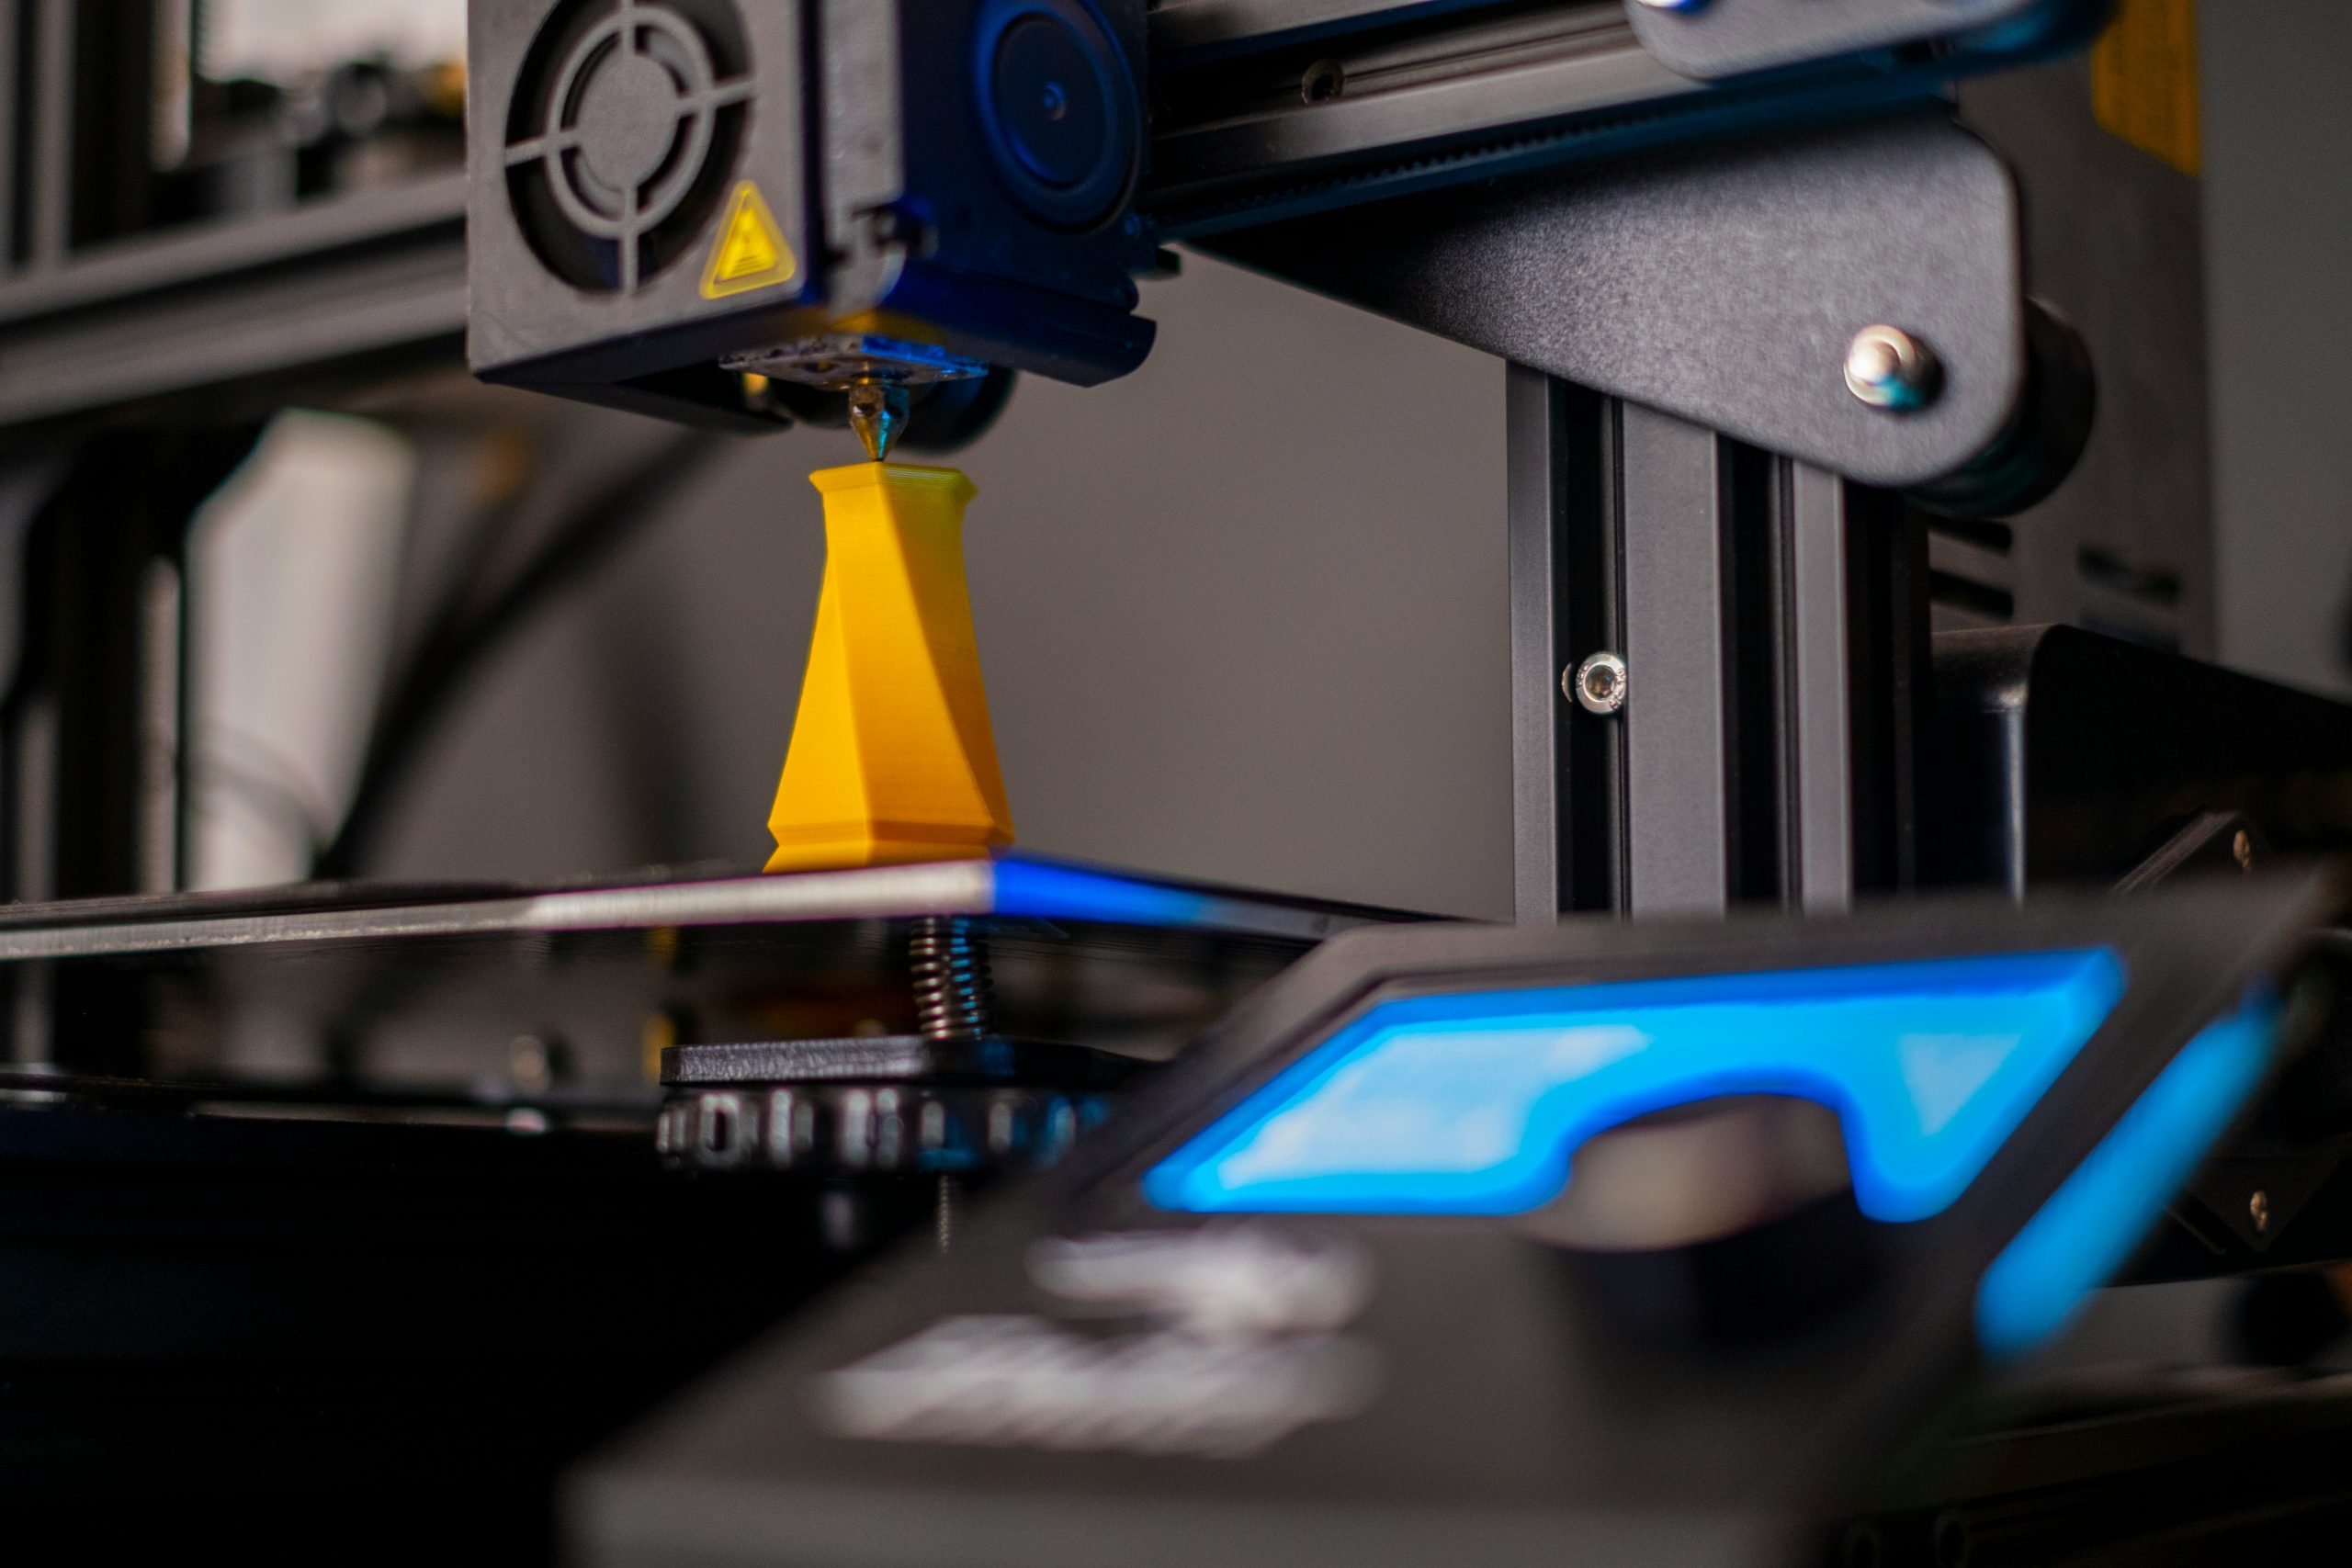 3D printing on demand